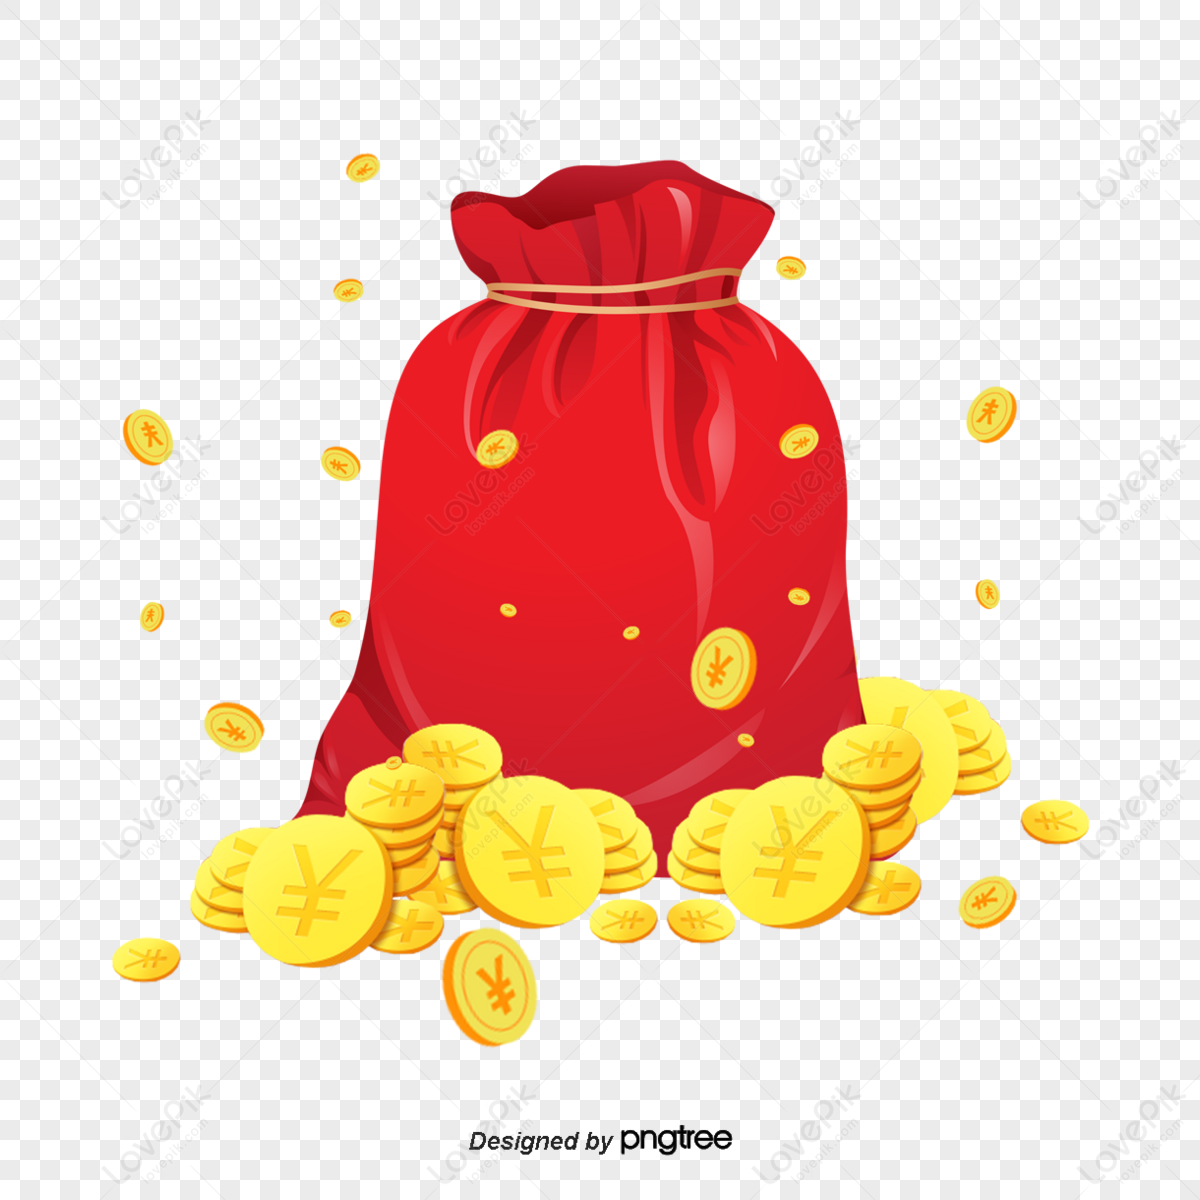 Purse bag for coins clipart design illustration 9379842 PNG